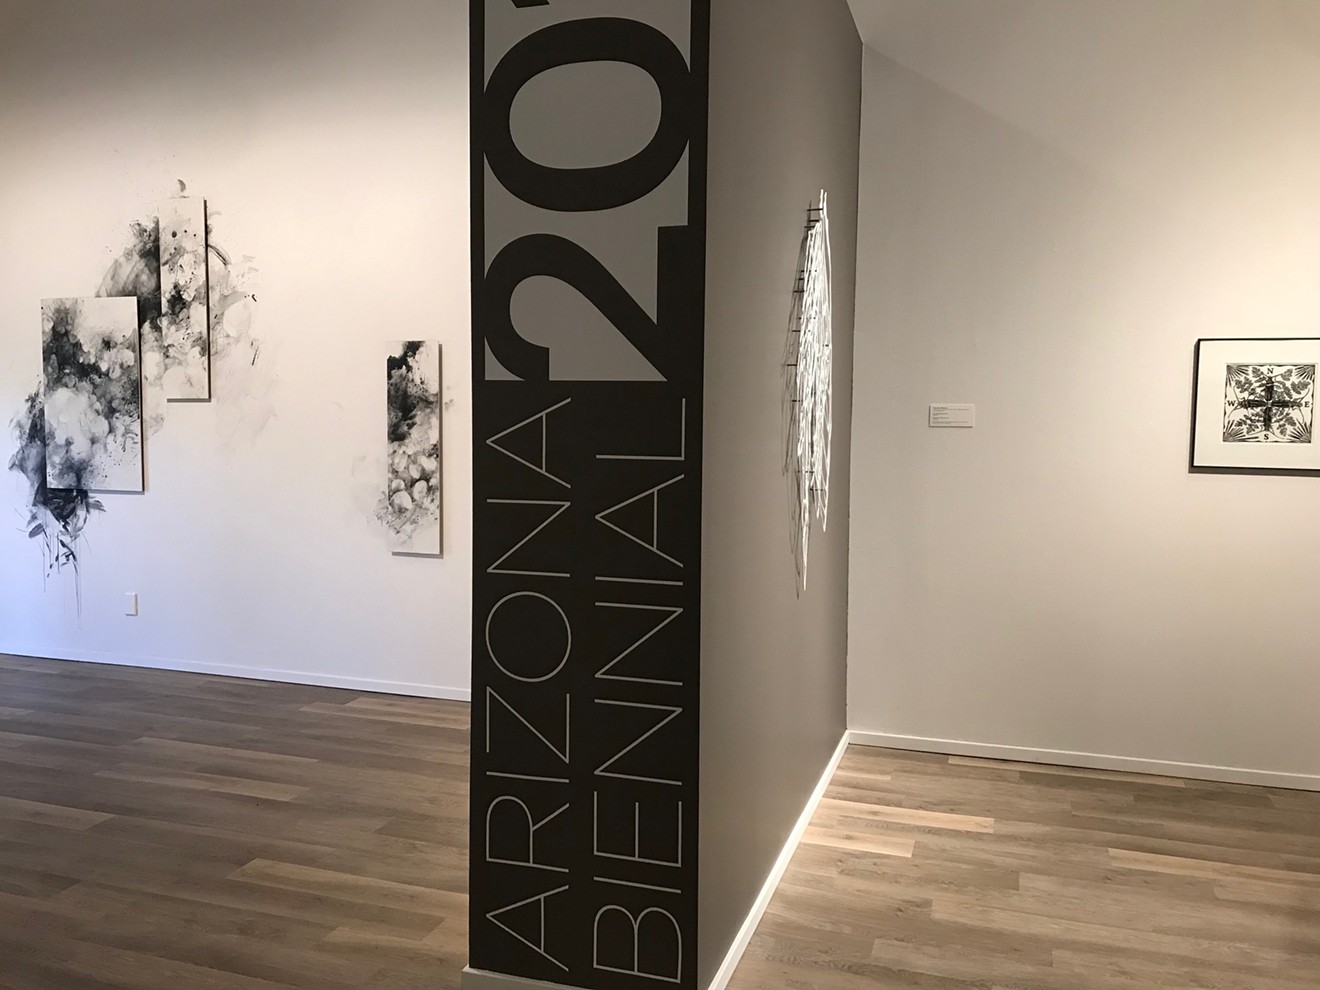 From left: Works by Jessica Palomo, Alan Bur Johnson, and Daniel Friedman in the "2018 Arizona Biennial."